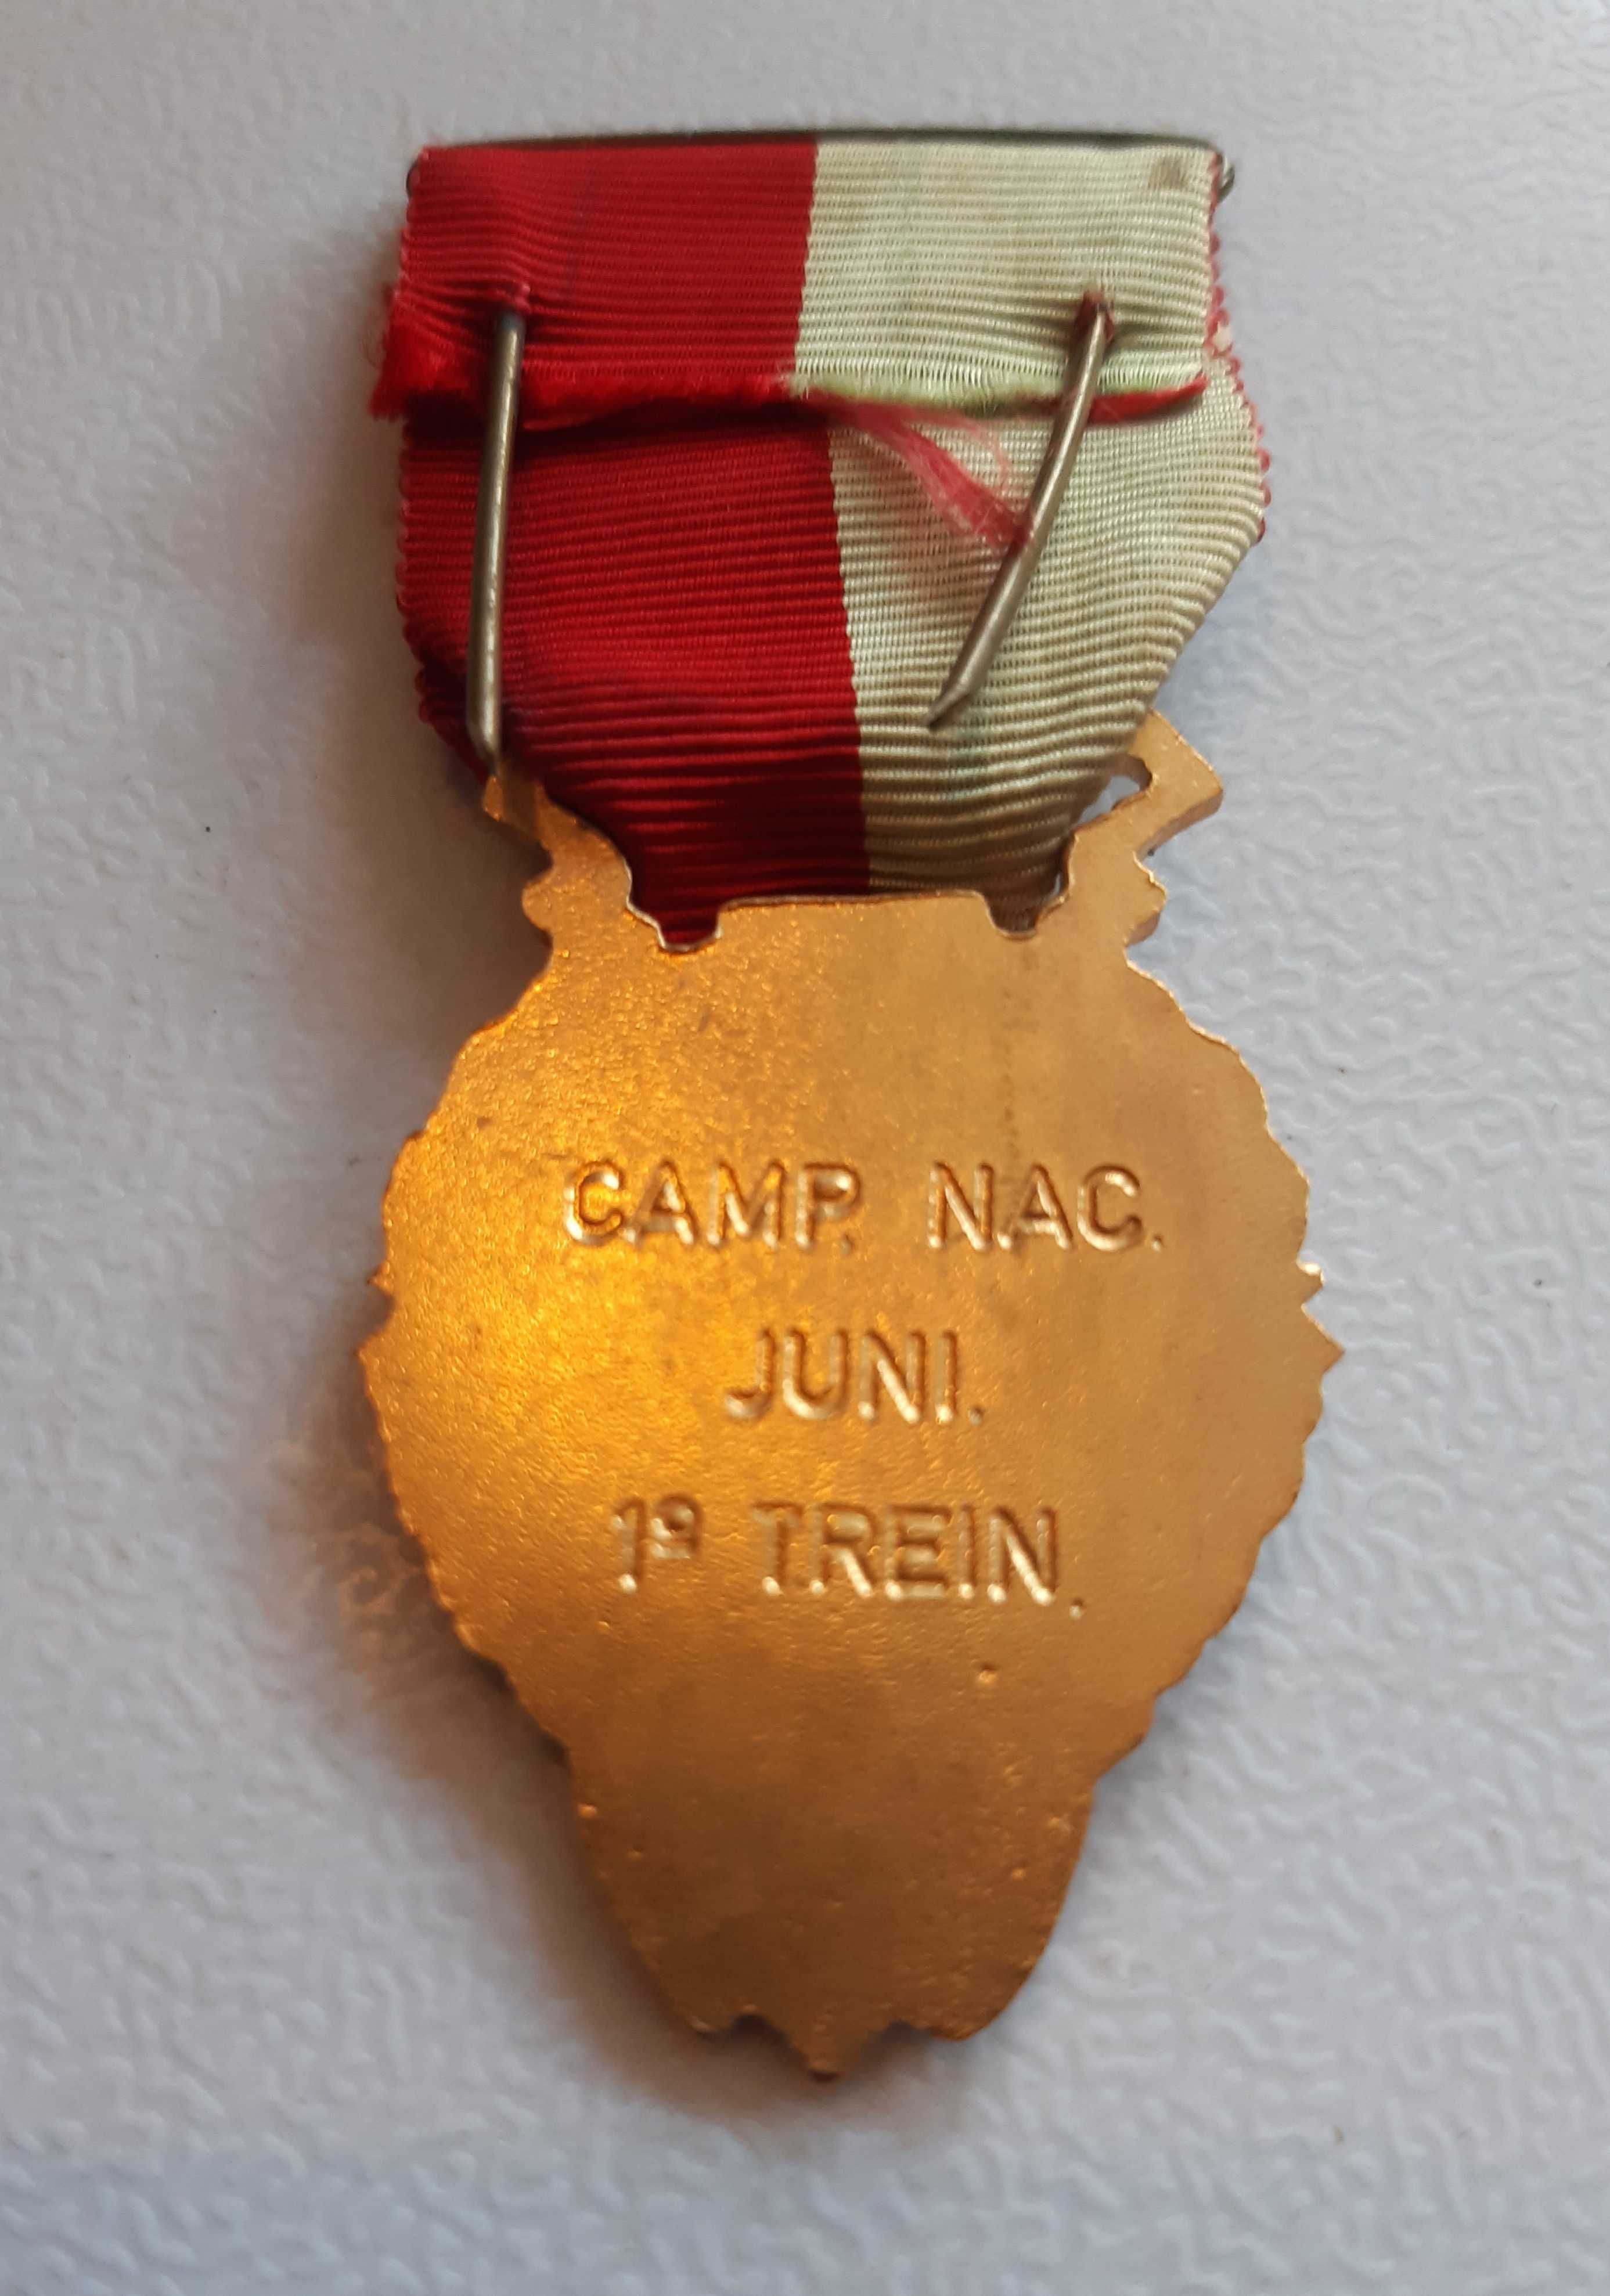 Medalha Antiga 1976